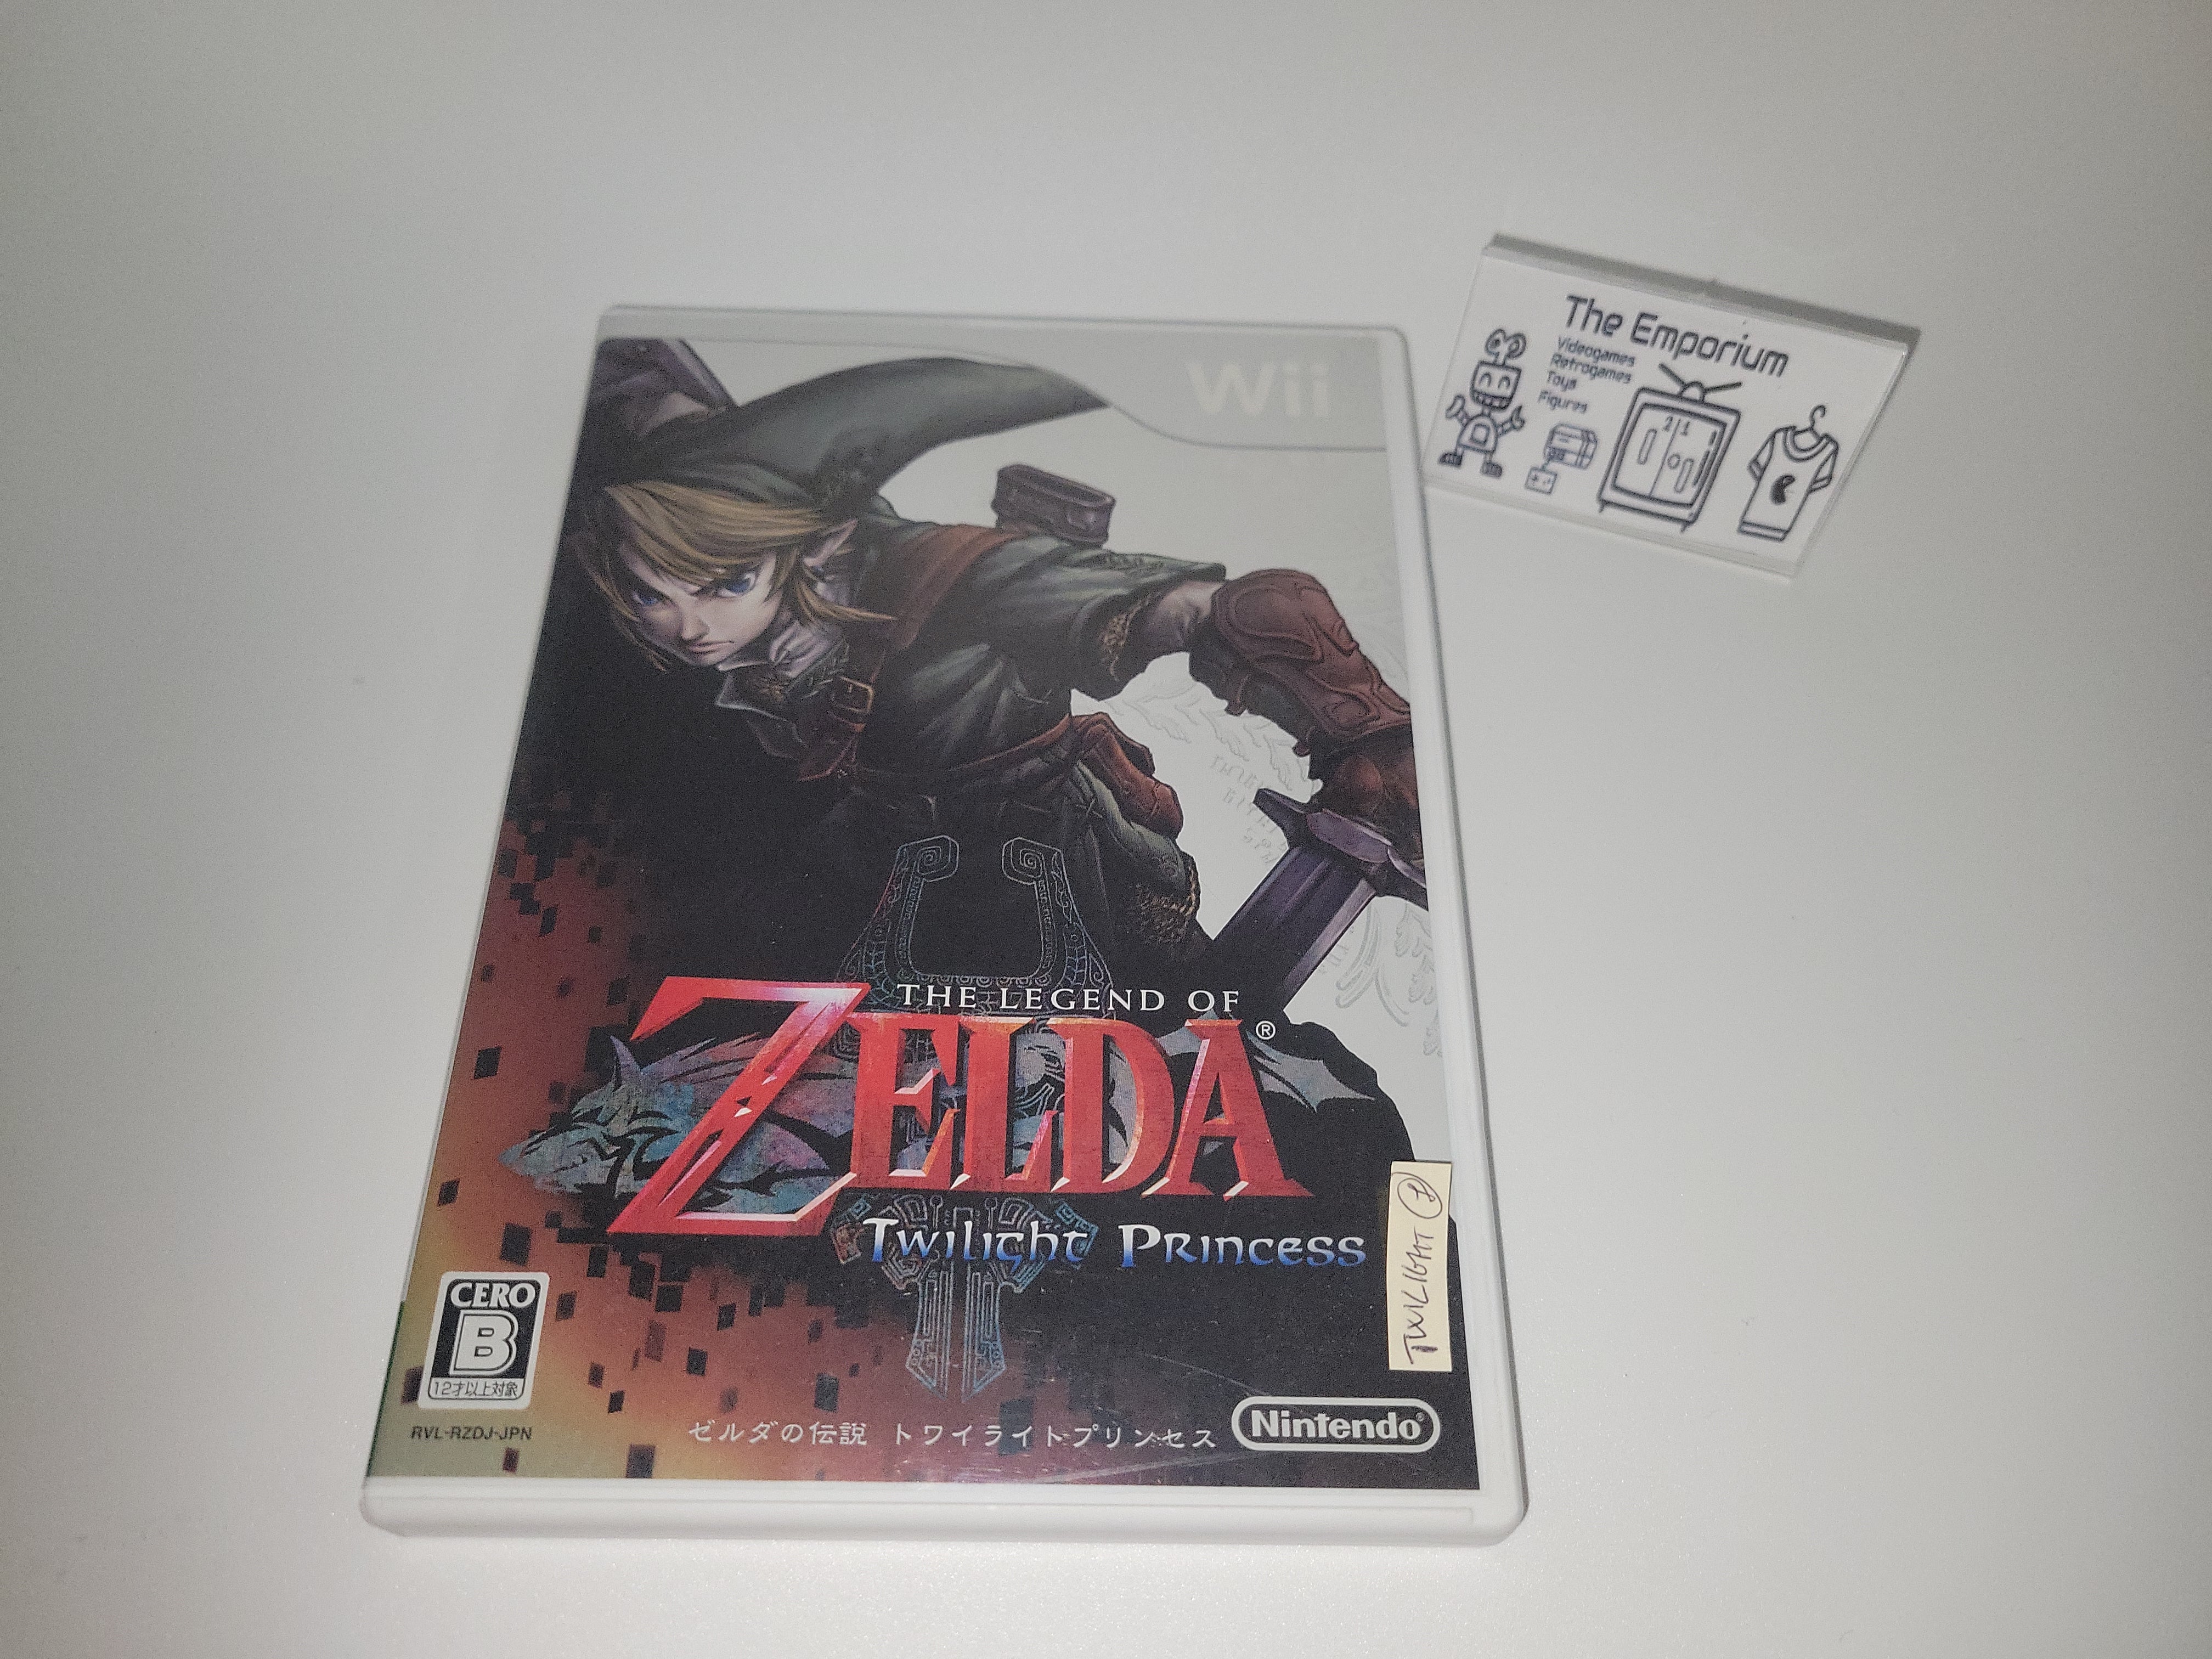 The Legend Of Zelda - Twilight Princess (USA) Nintendo Wii ROM ISO